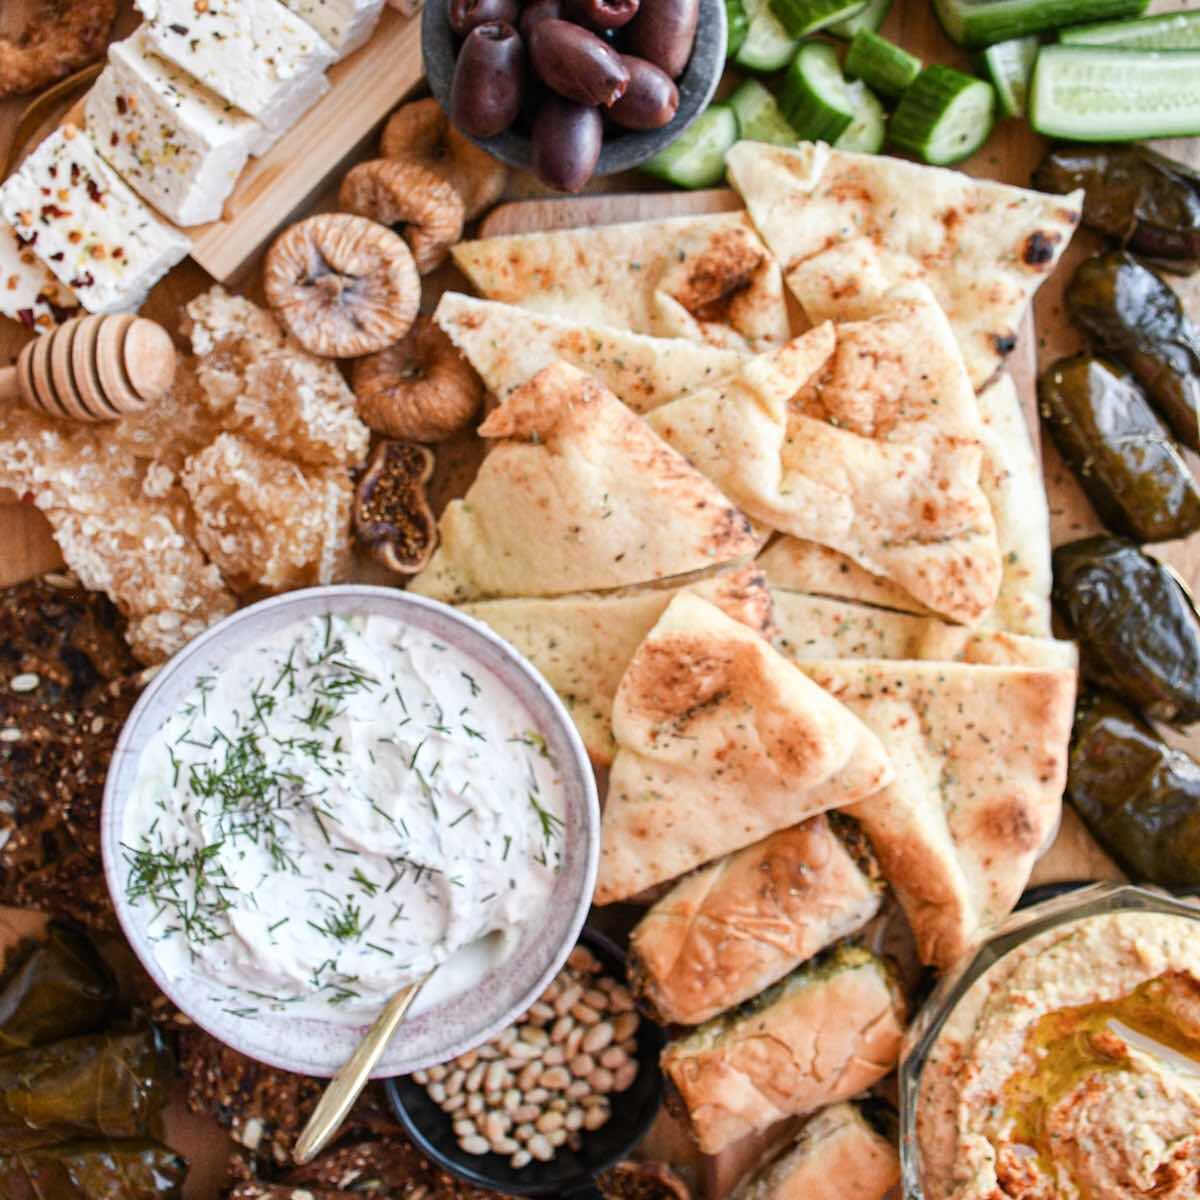 greek mezze board with pita bread, tzatziki, dolmades, halloumi, figs, and sliced feta cheese.